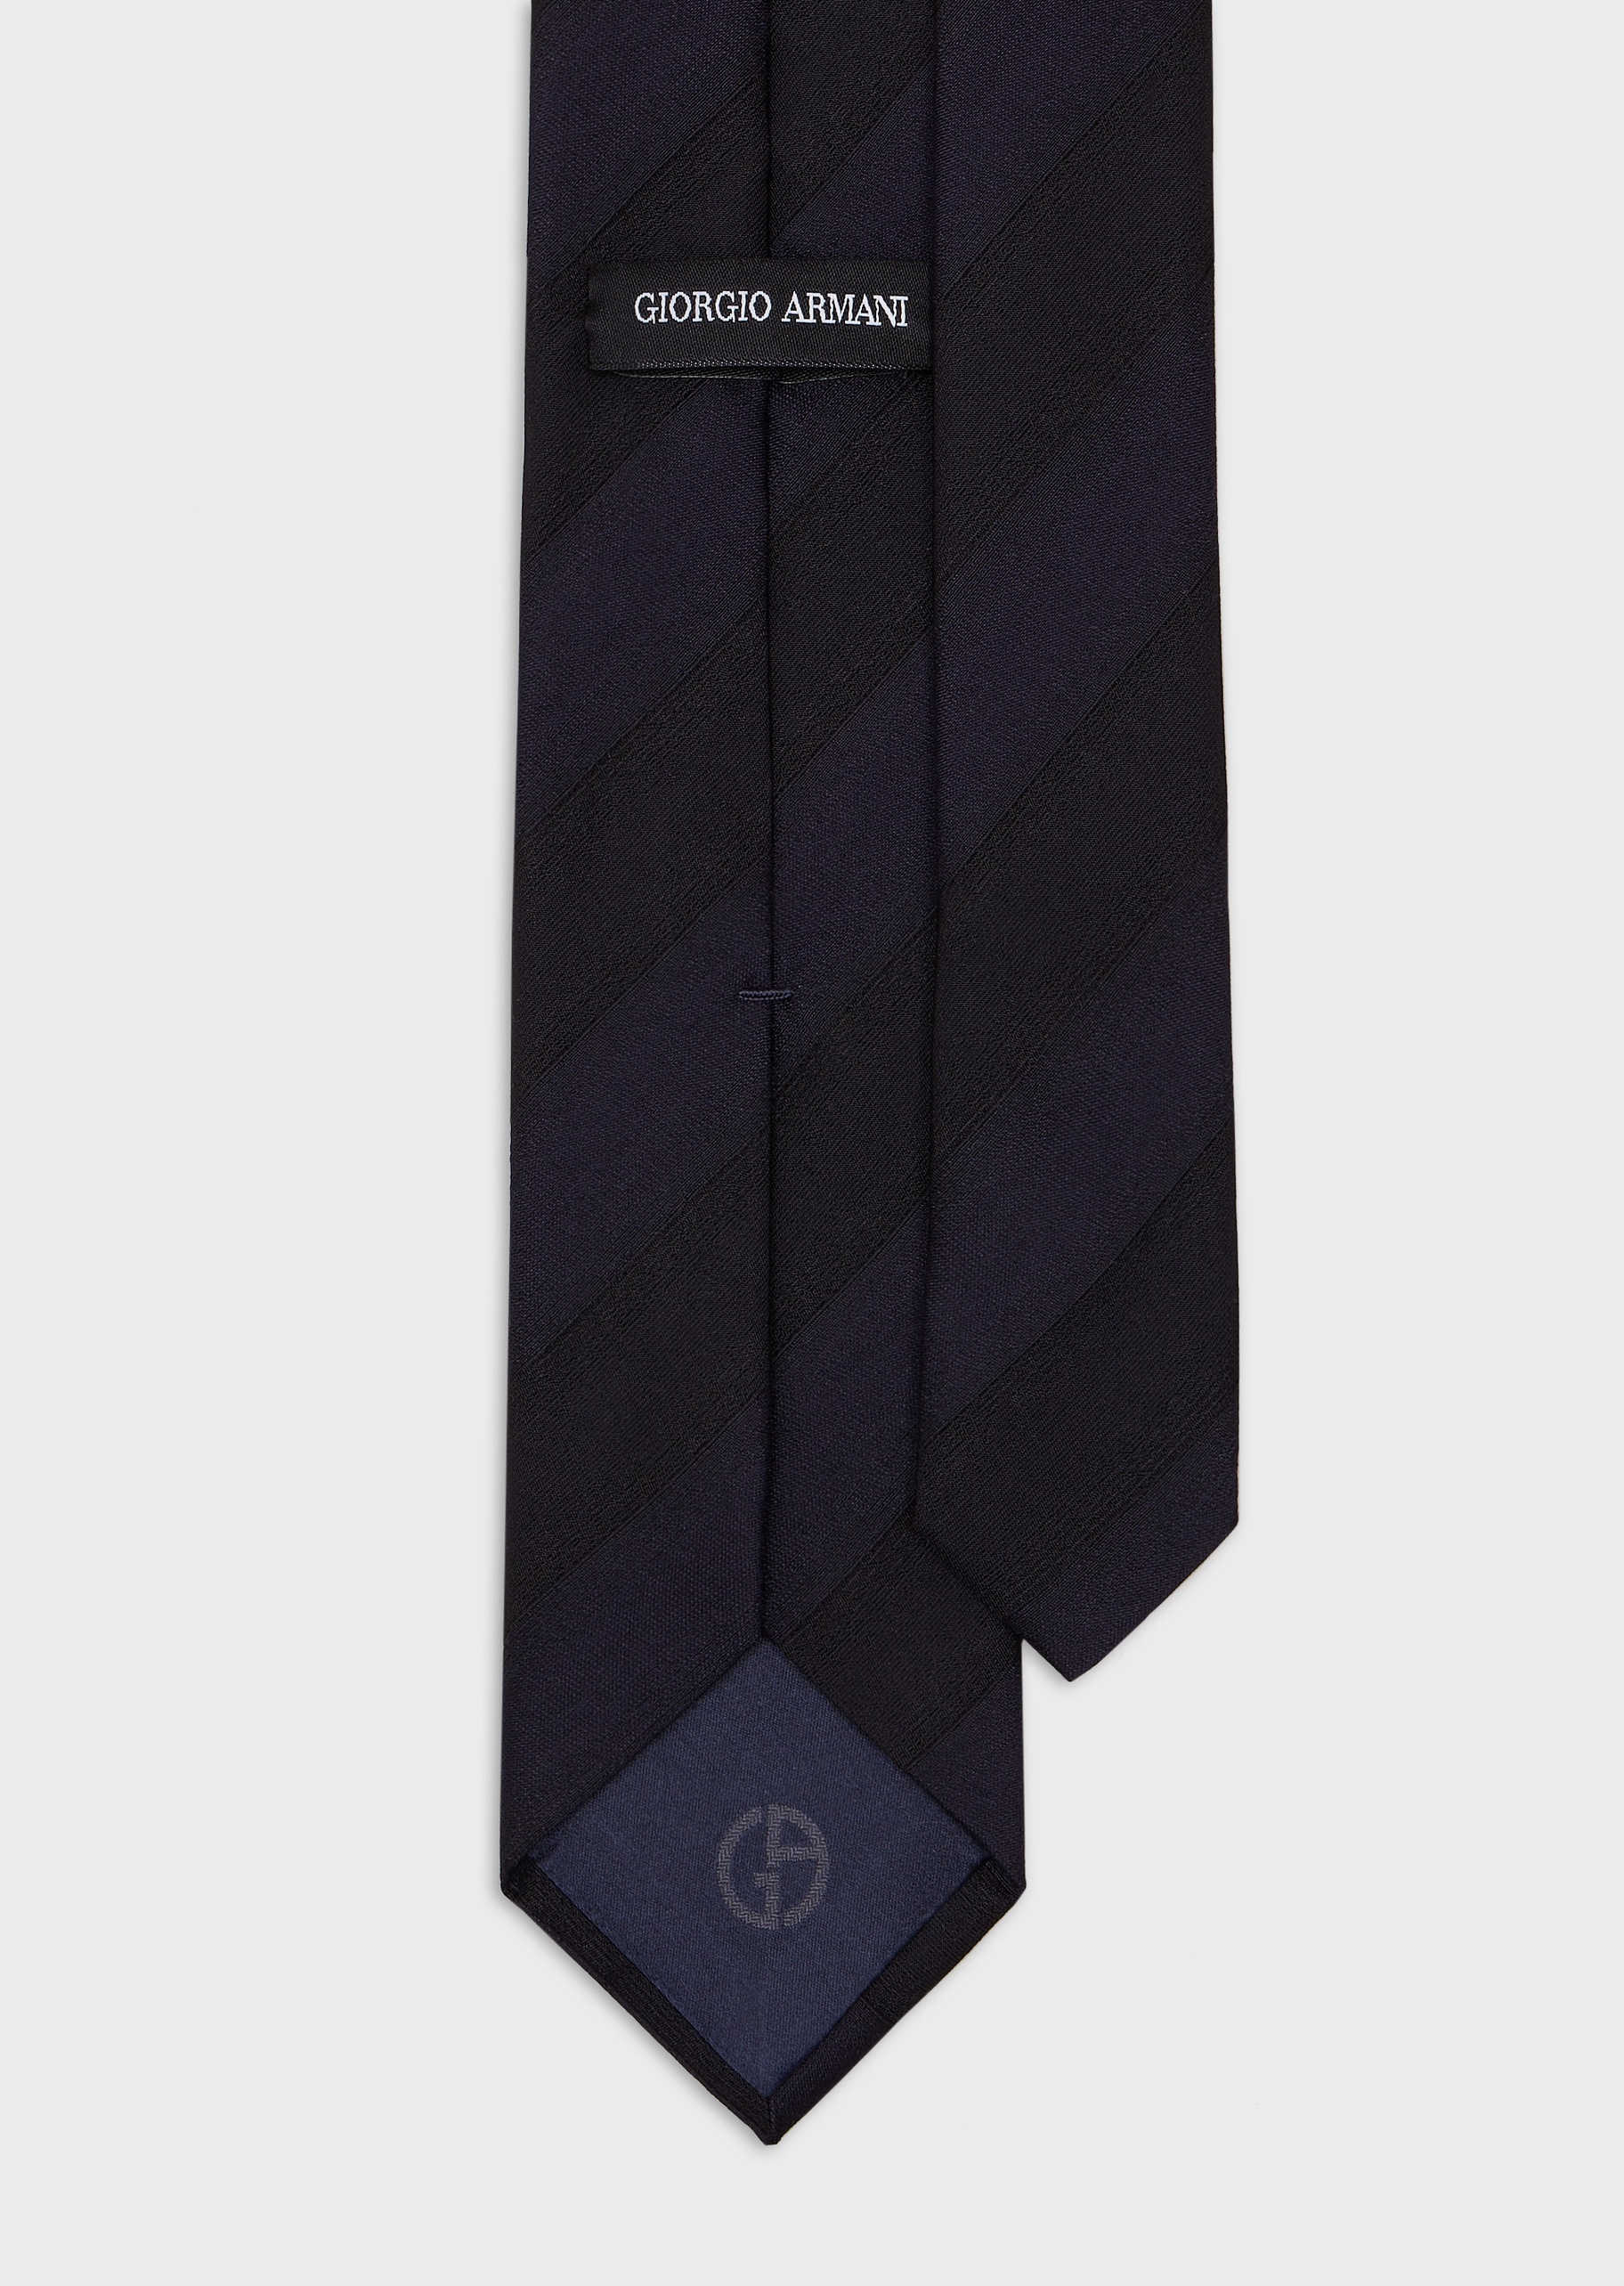 Giorgio Armani 男士休闲商务箭头型绵羊毛宽斜条纹领带